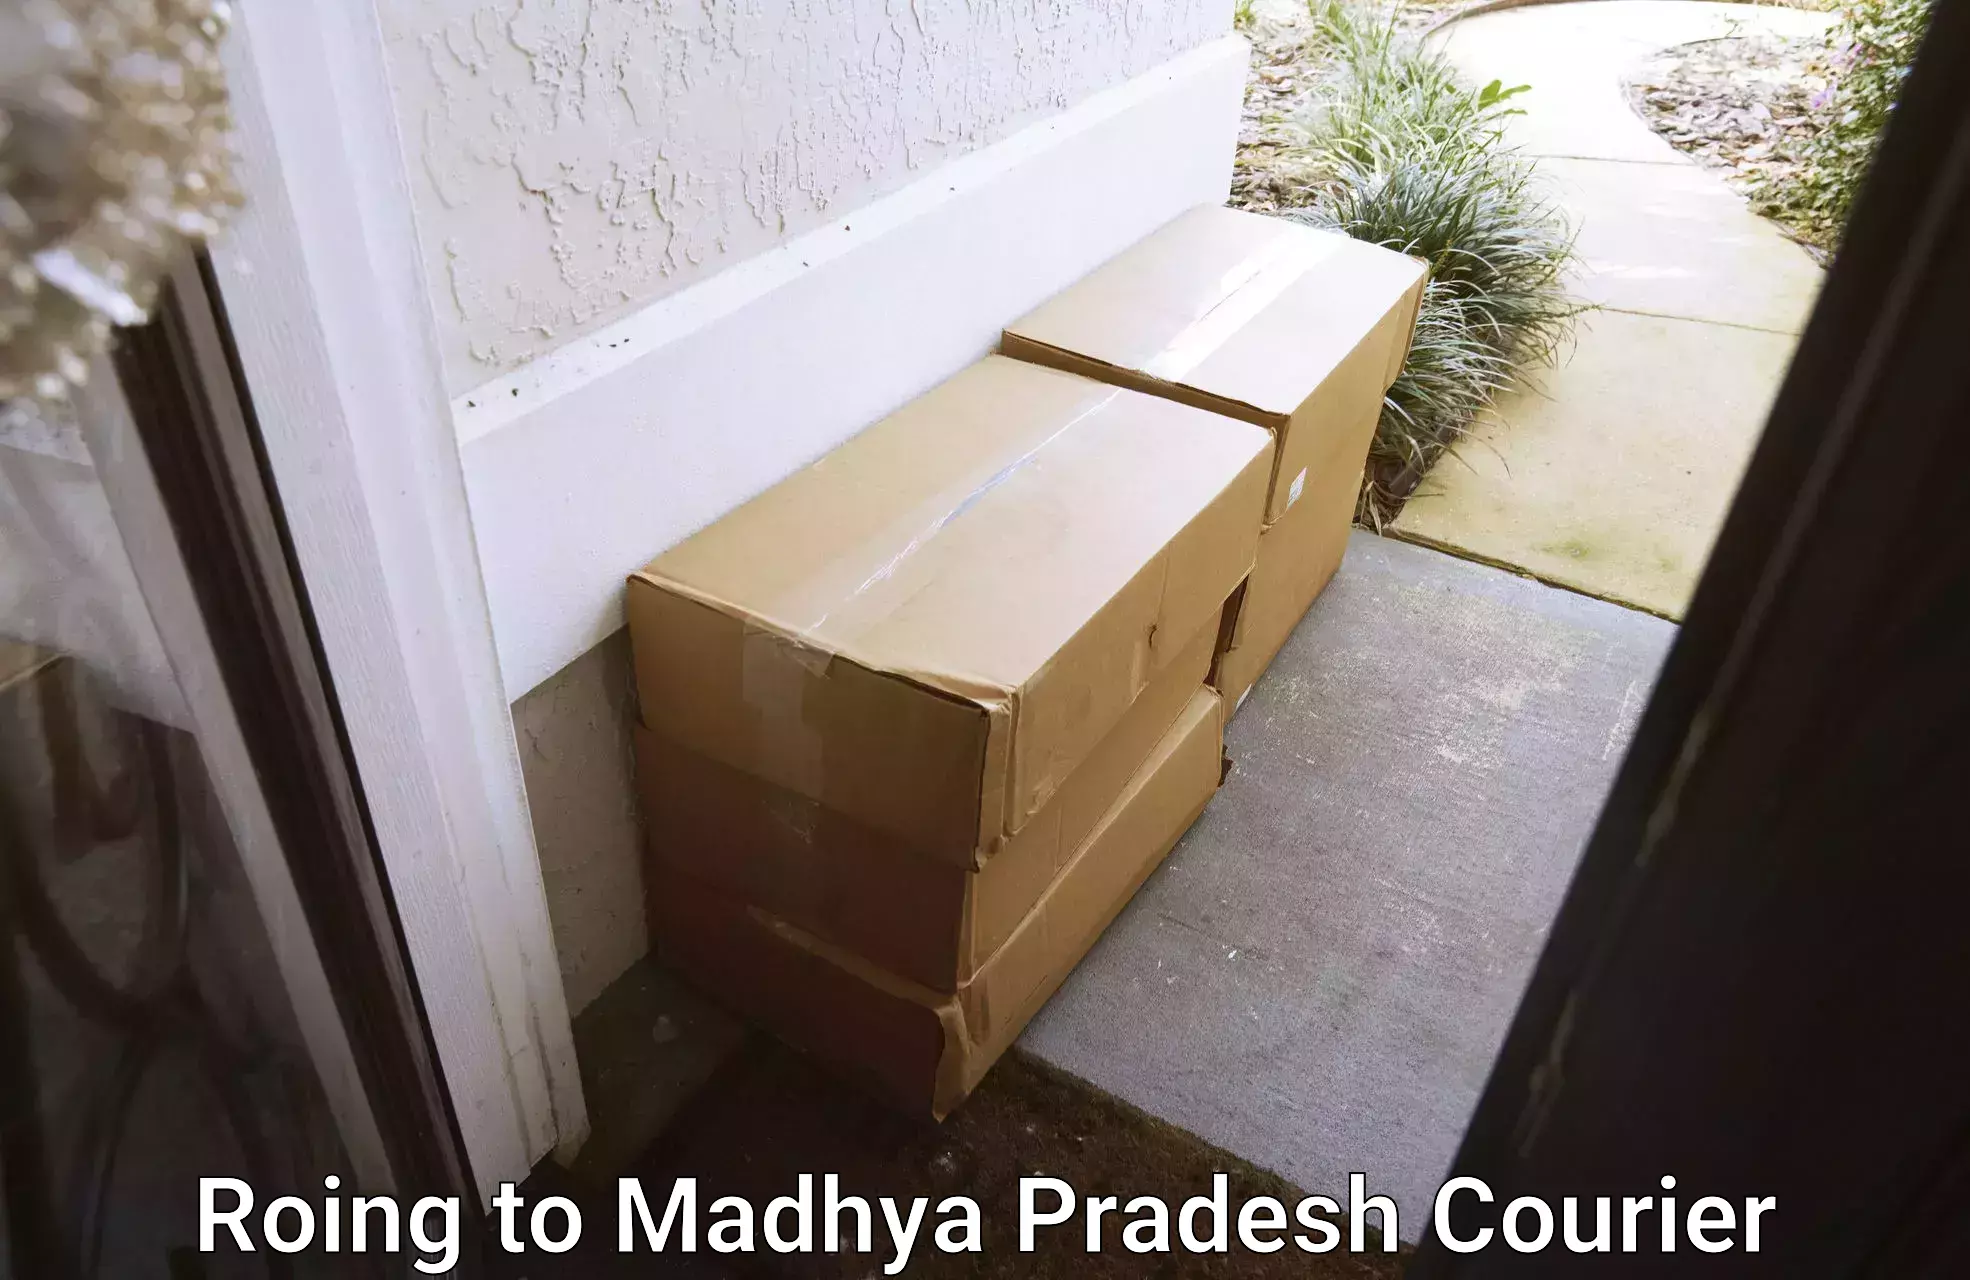 High-speed parcel service Roing to Dewas